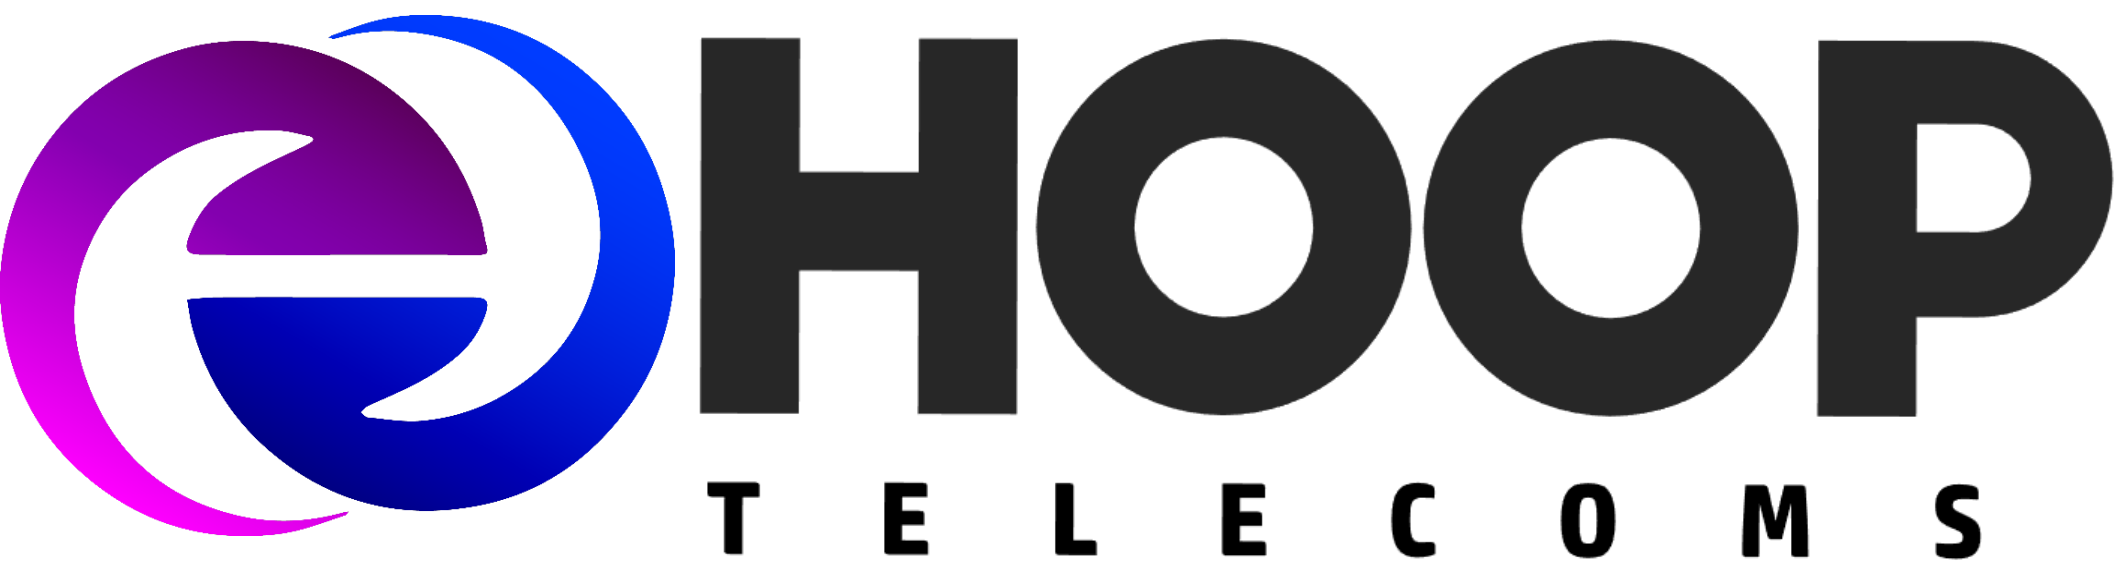 HOOPS telecom logo